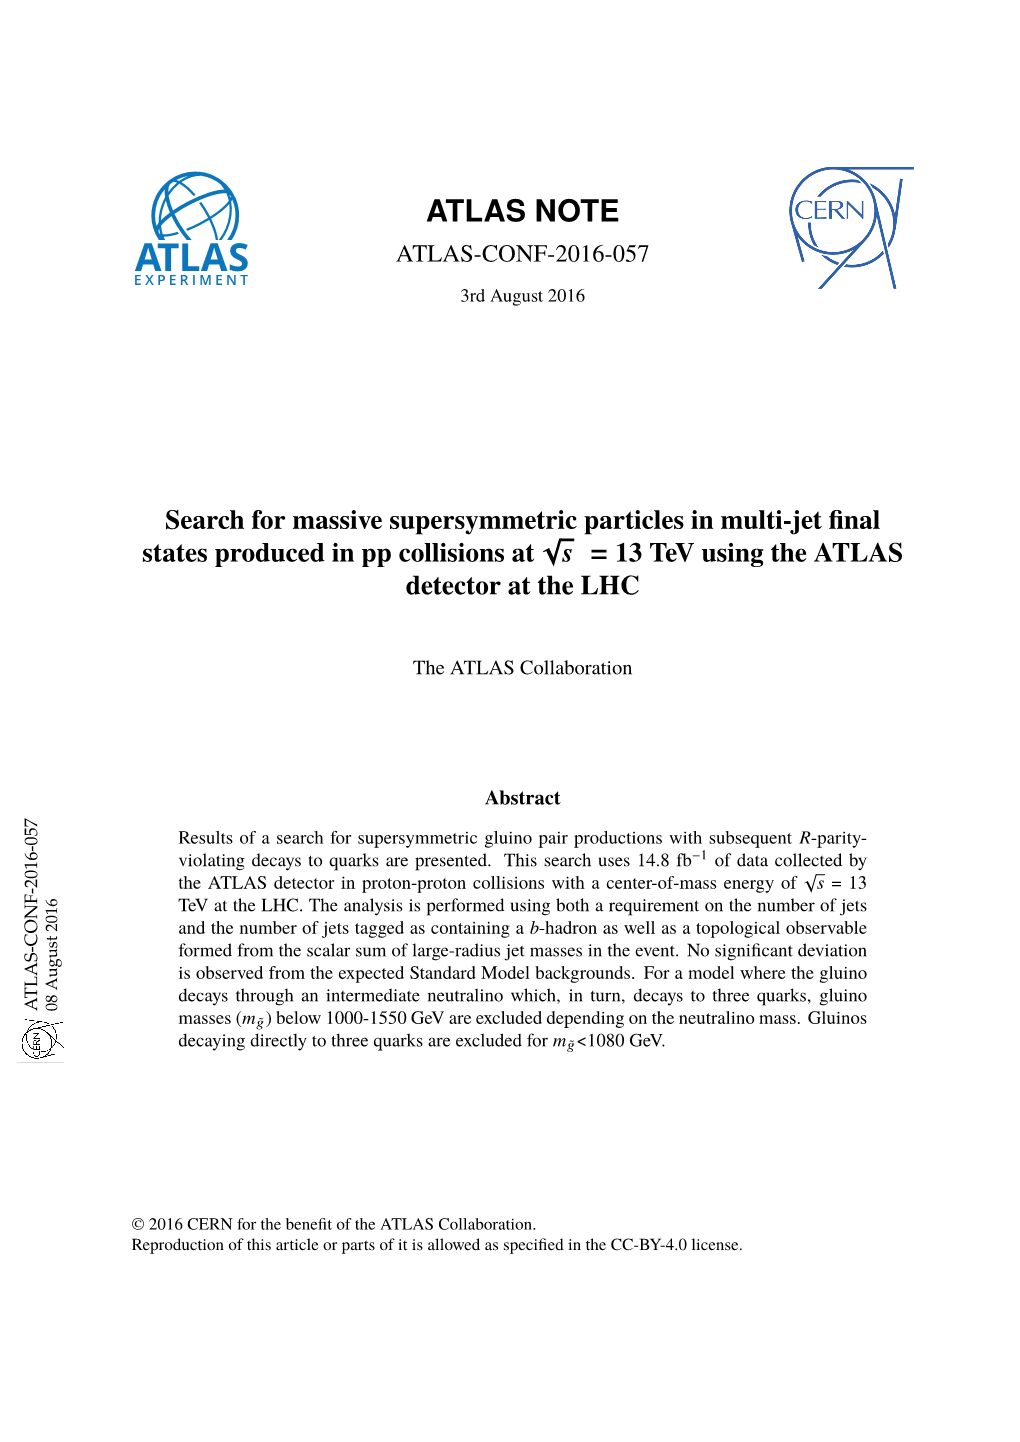 ATLAS Document